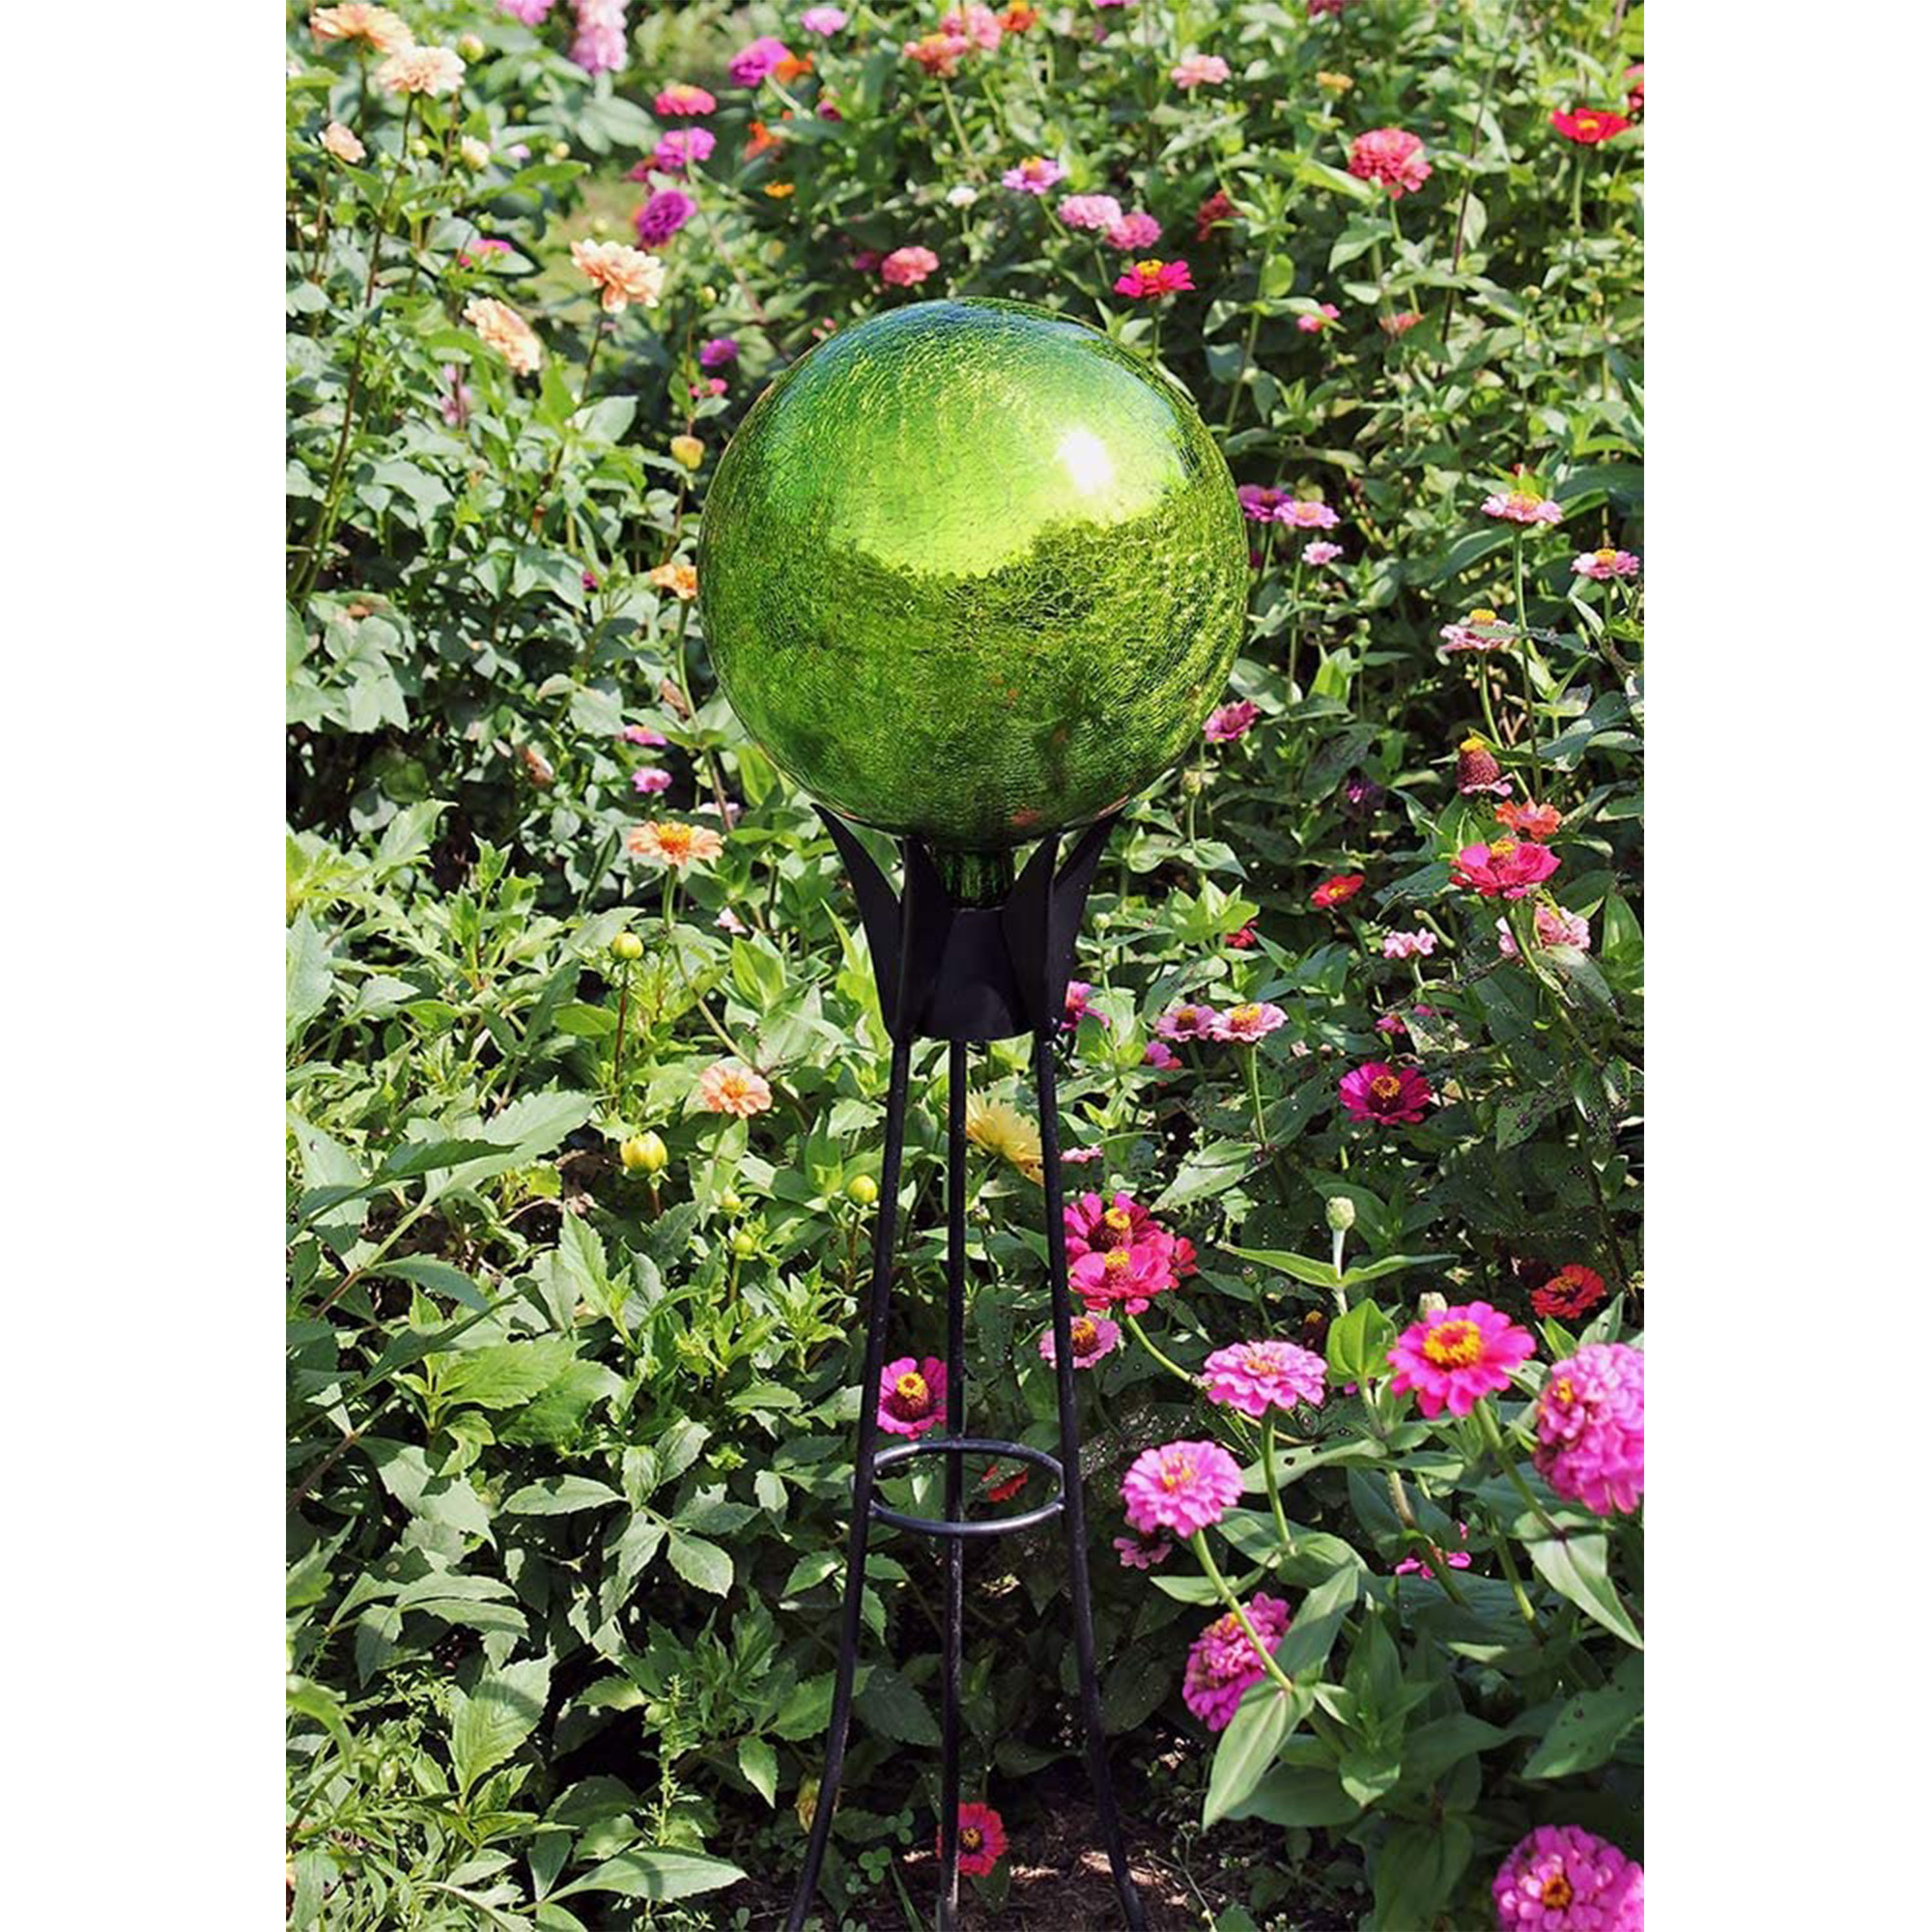 Achla Designs 12 Inch Gazing Glass Globe Sphere Garden Ornament, Fern Green - image 4 of 6